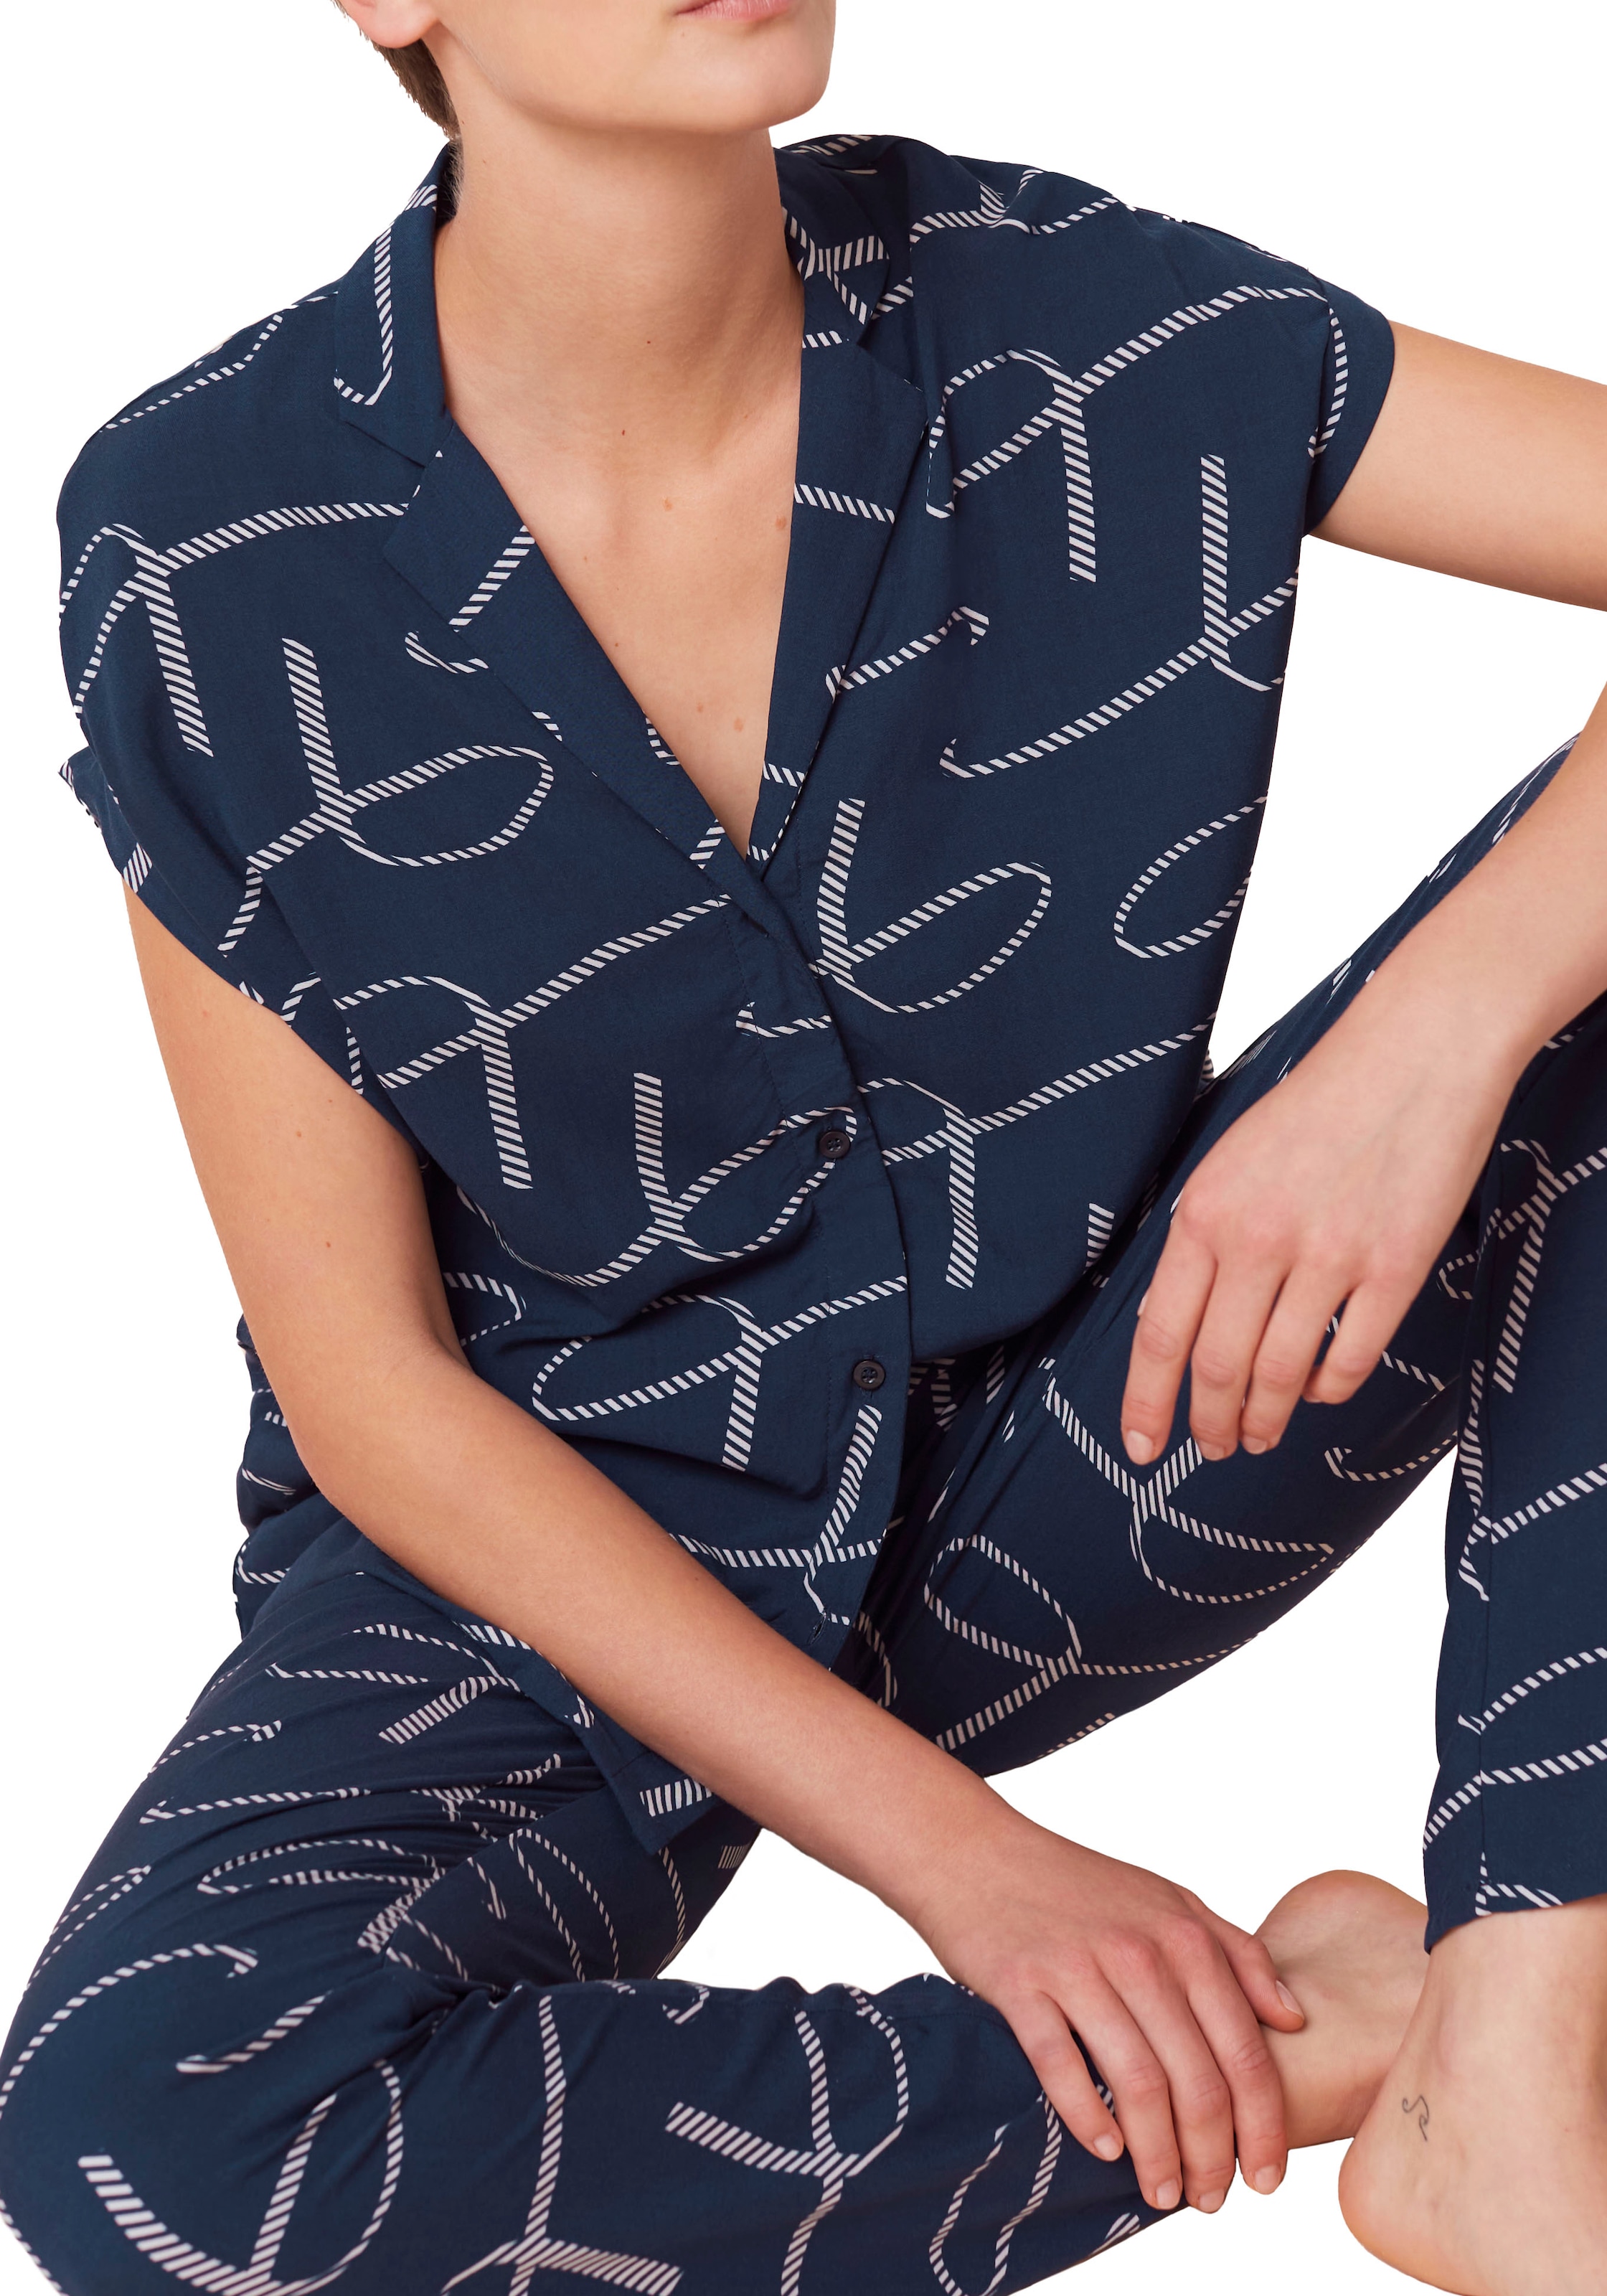 Triumph Pyjama »Boyfriend Fit PW 01«, (Set, 2 tlg.), Triumph-Logodruck  online kaufen | I\'m walking